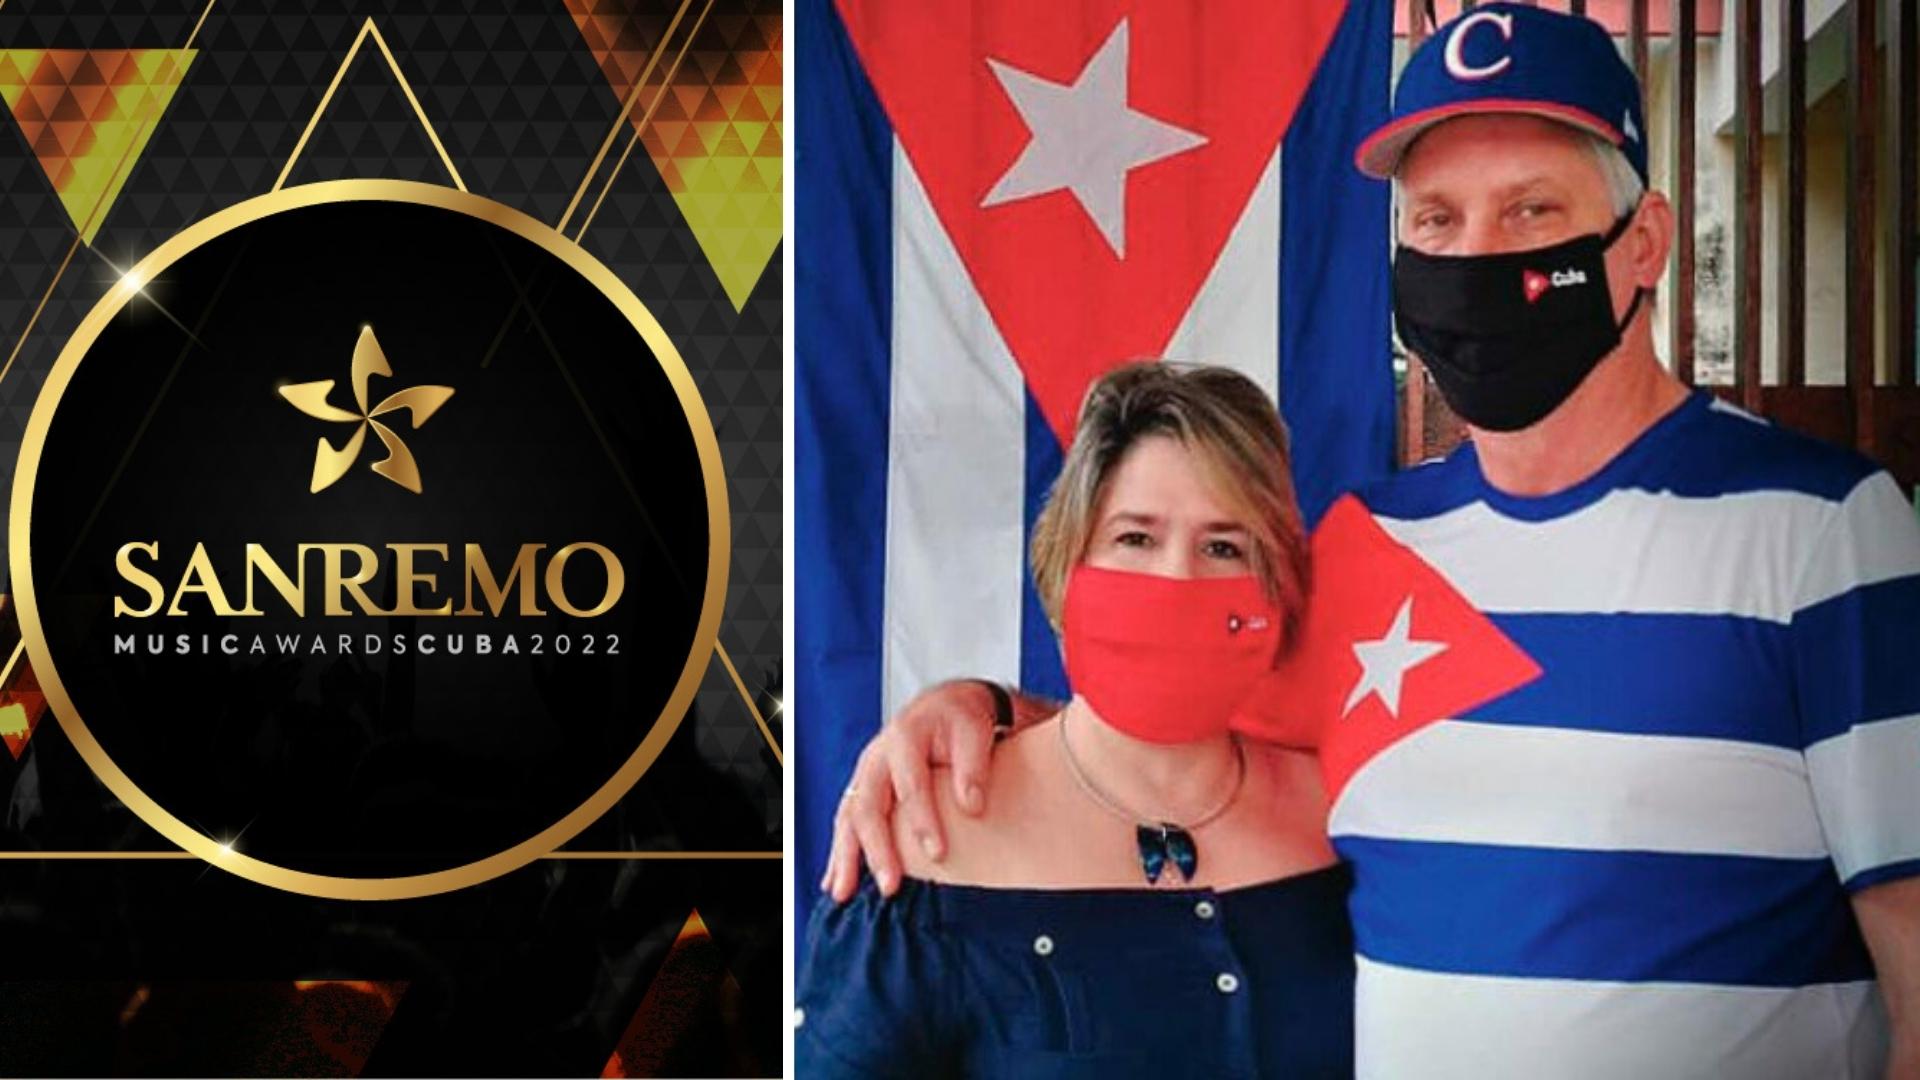 Festival de San remo organizado por dictadura cubana